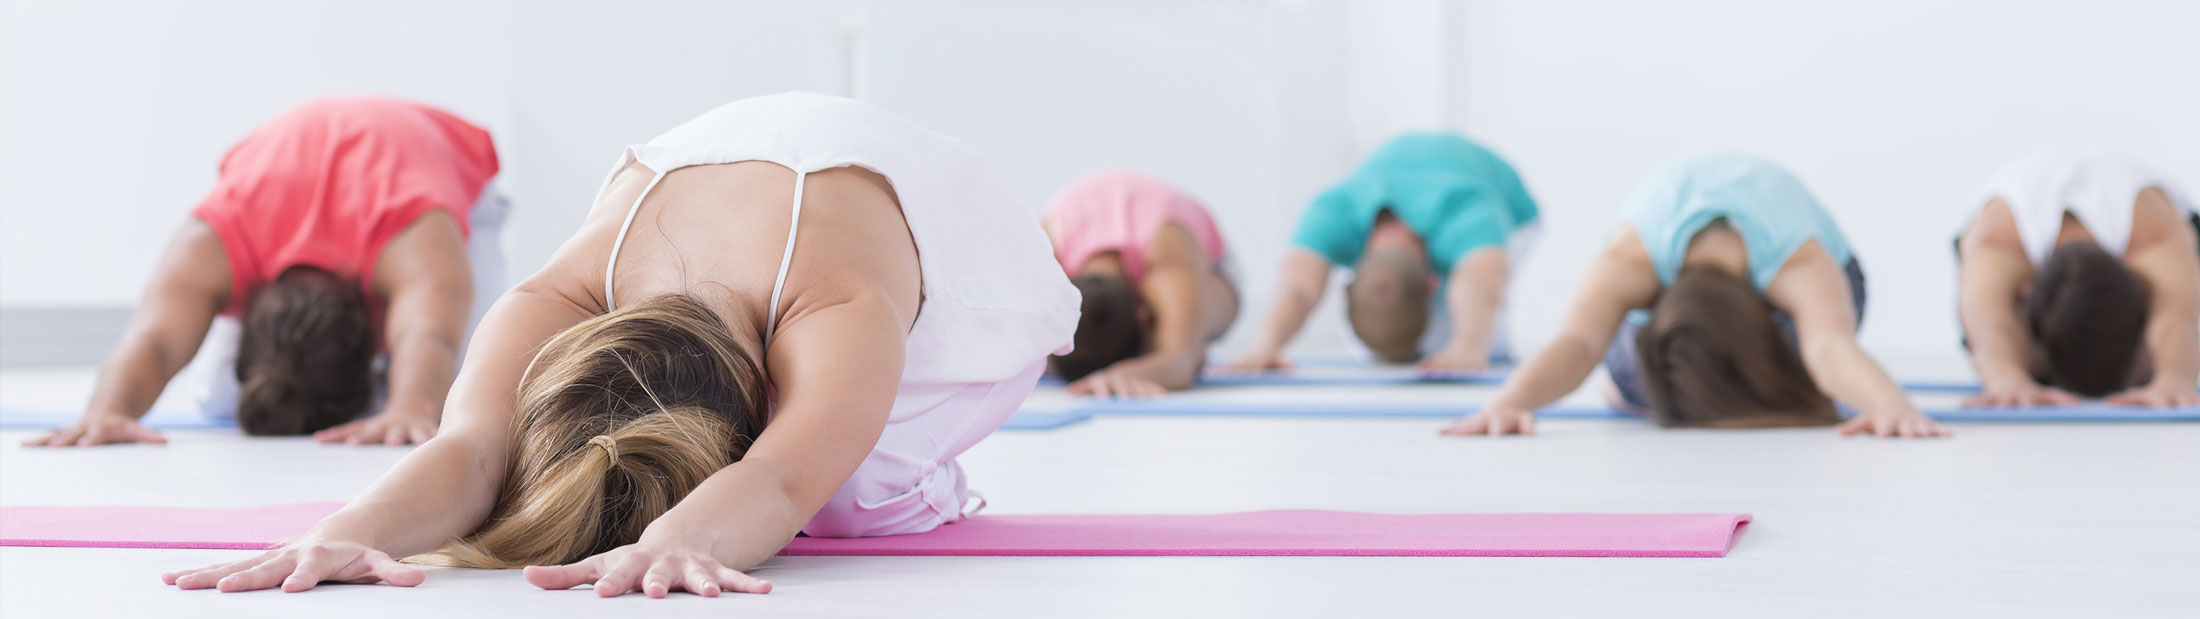 How to Overcome Self-Limiting Beliefs in your Yoga Practice | Adventure Yogi